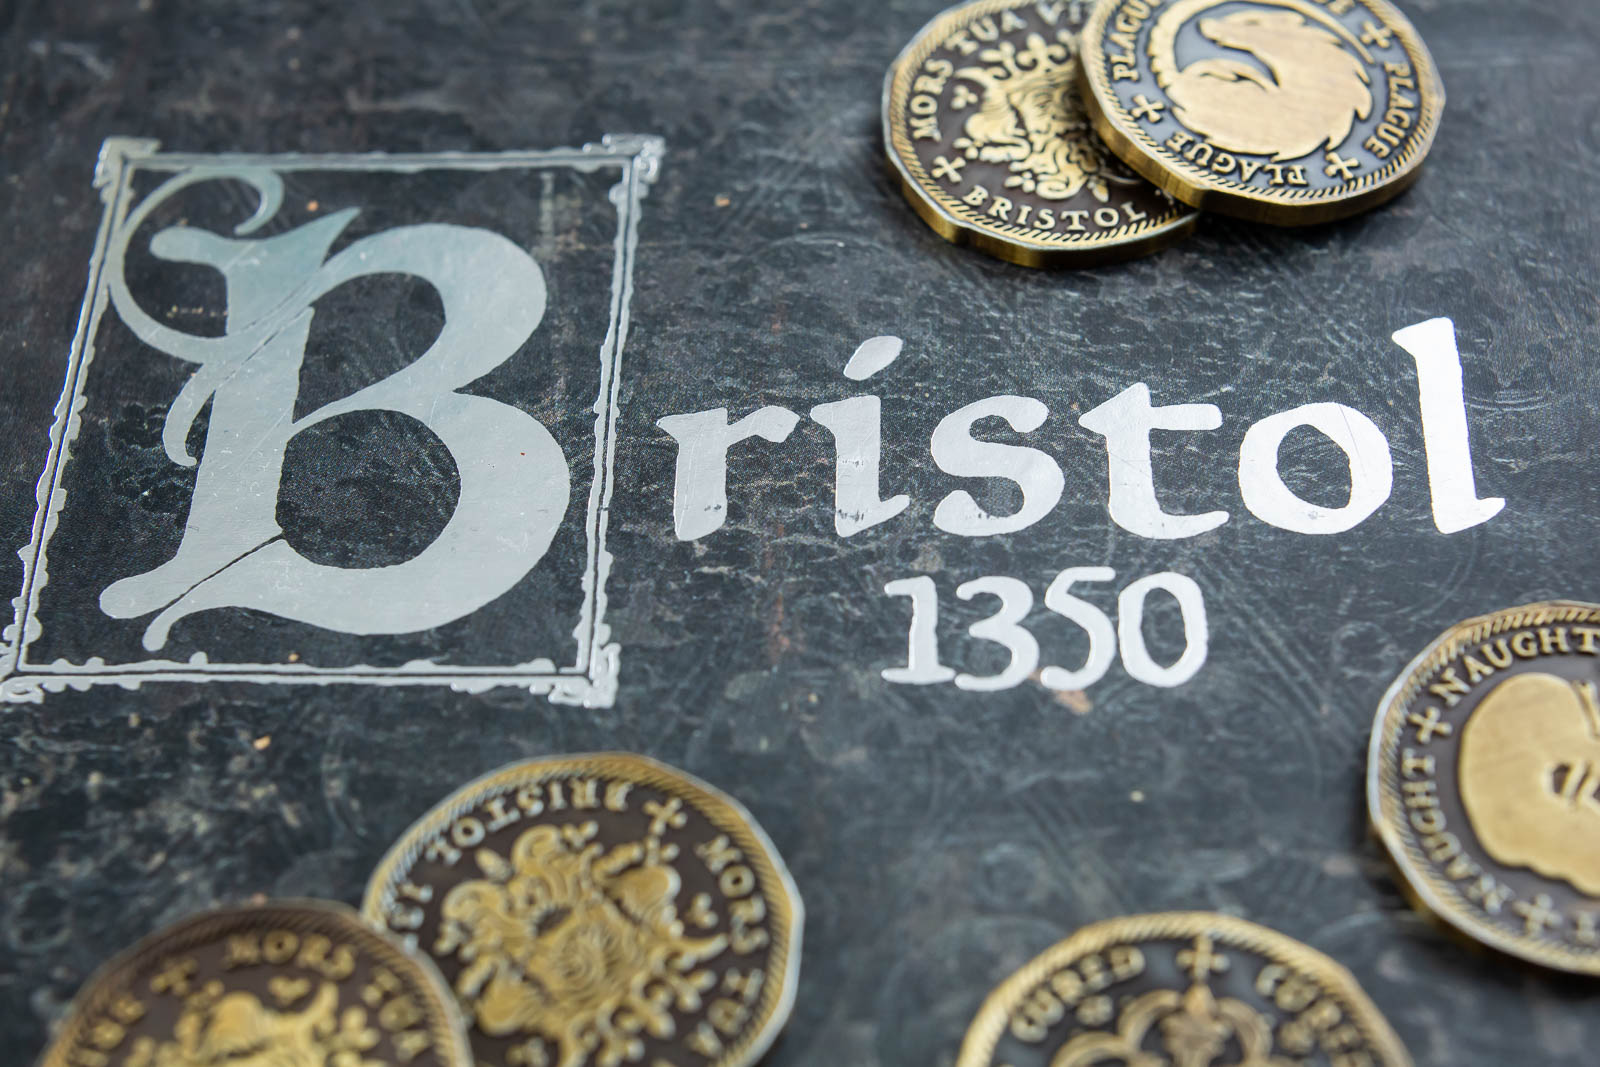 bristol-1350-the-game-bocks